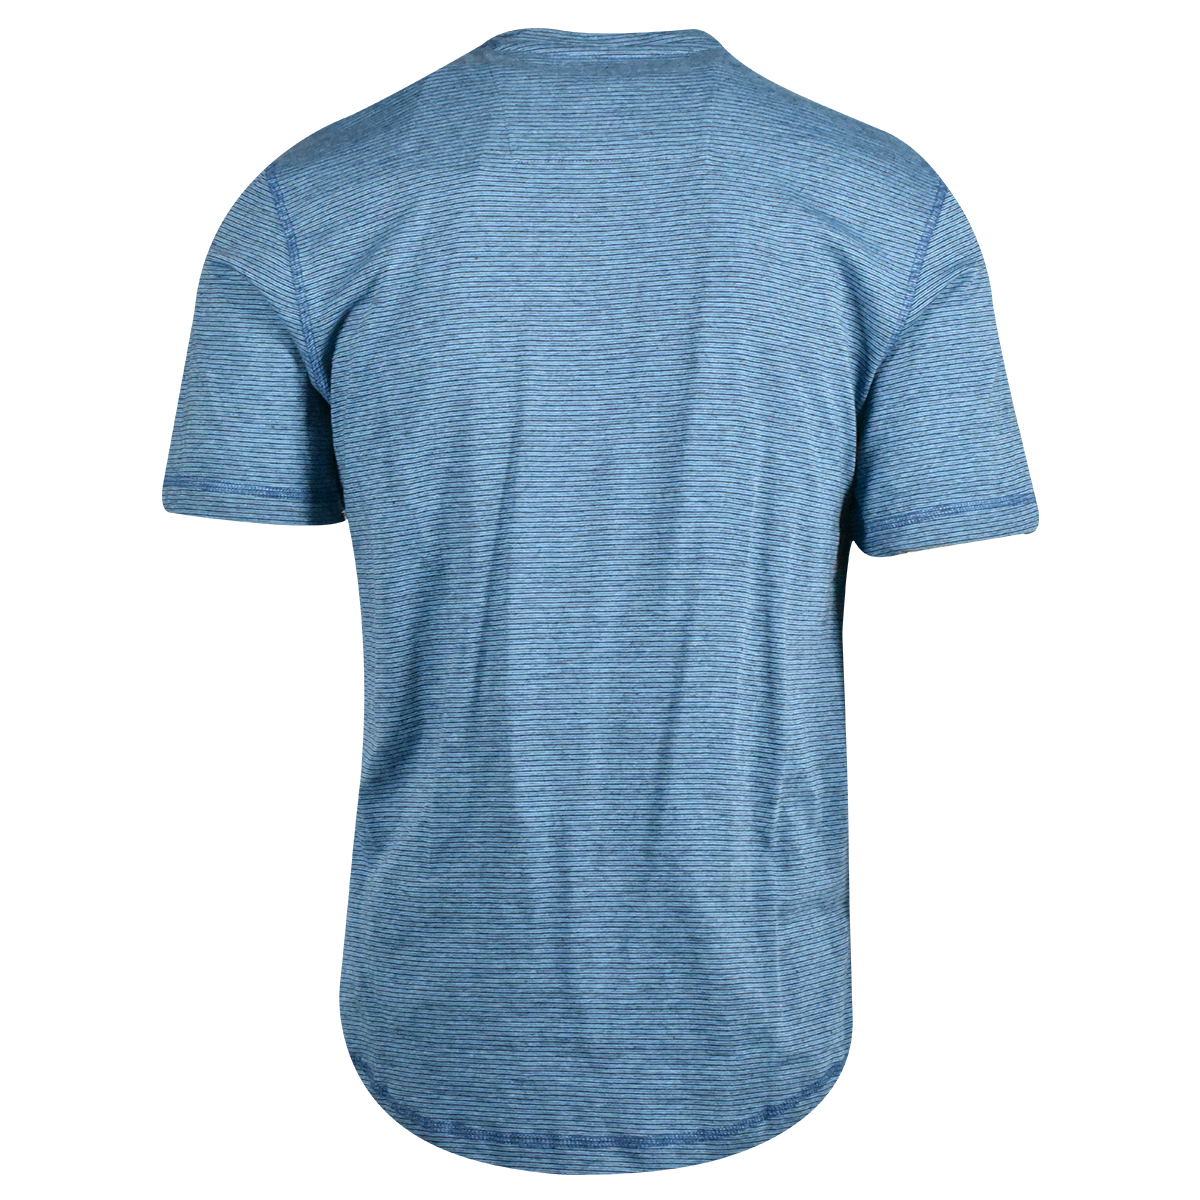 Chaps Men's Basic T-Shirt Coastland Wash Henley